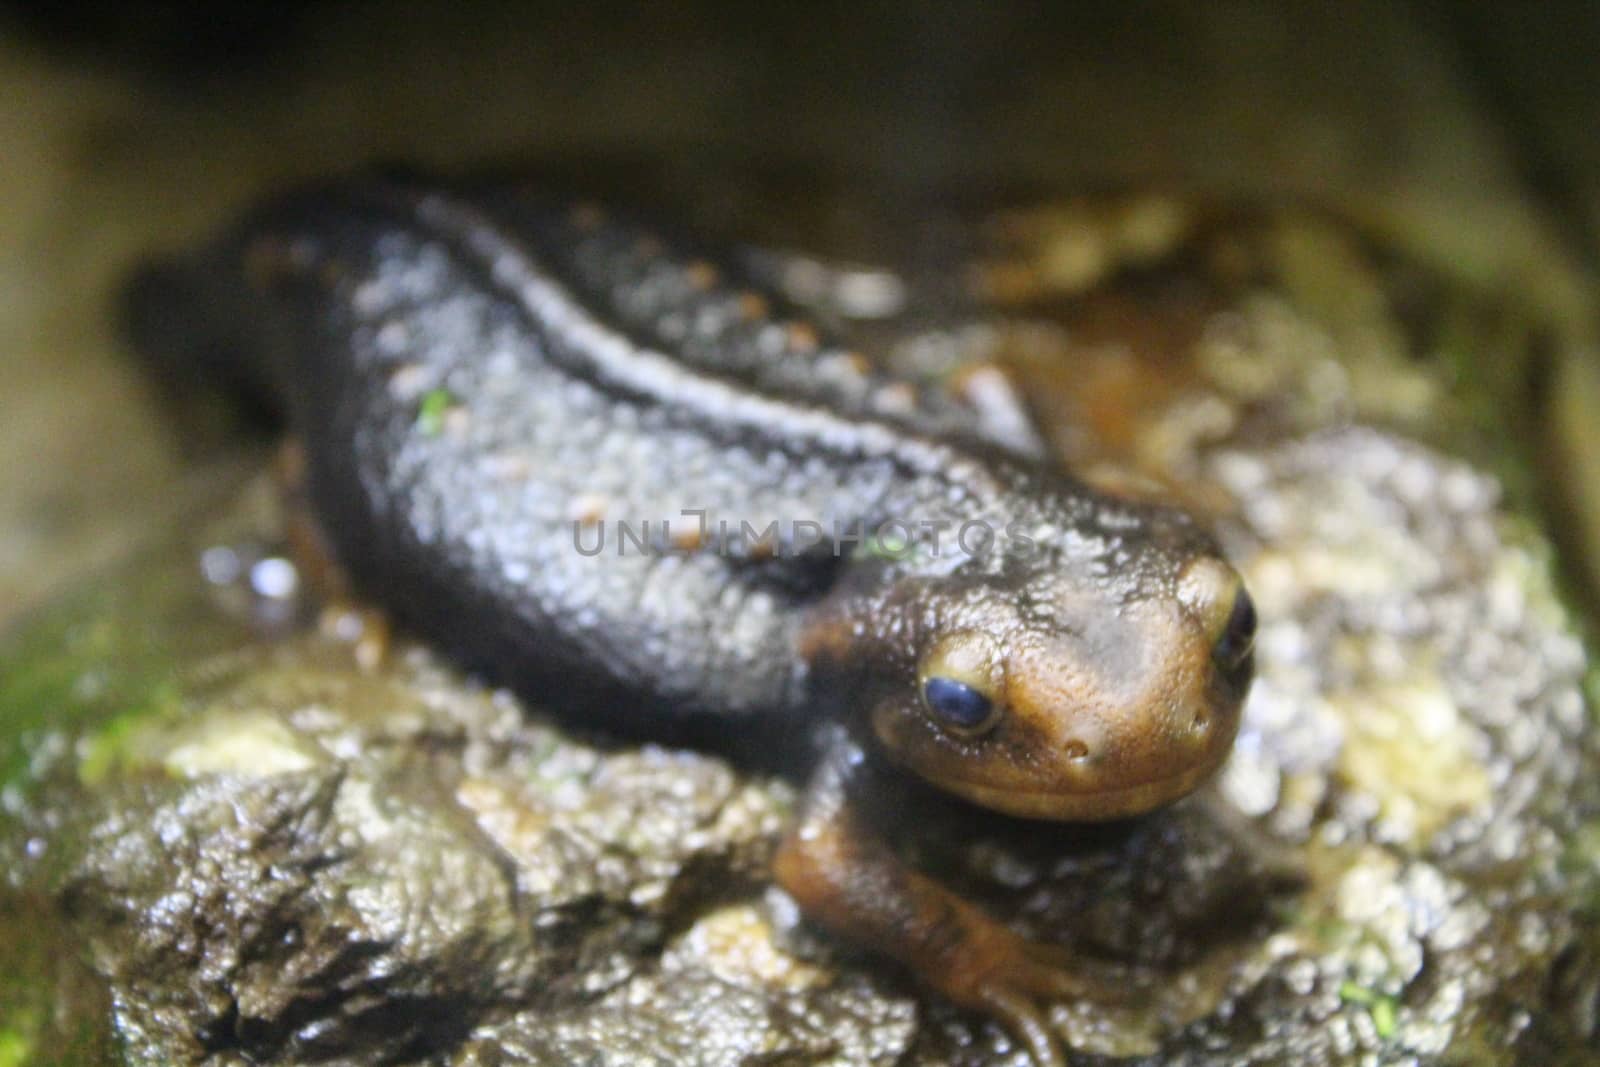 A small newt sits in a terrarium. Nature